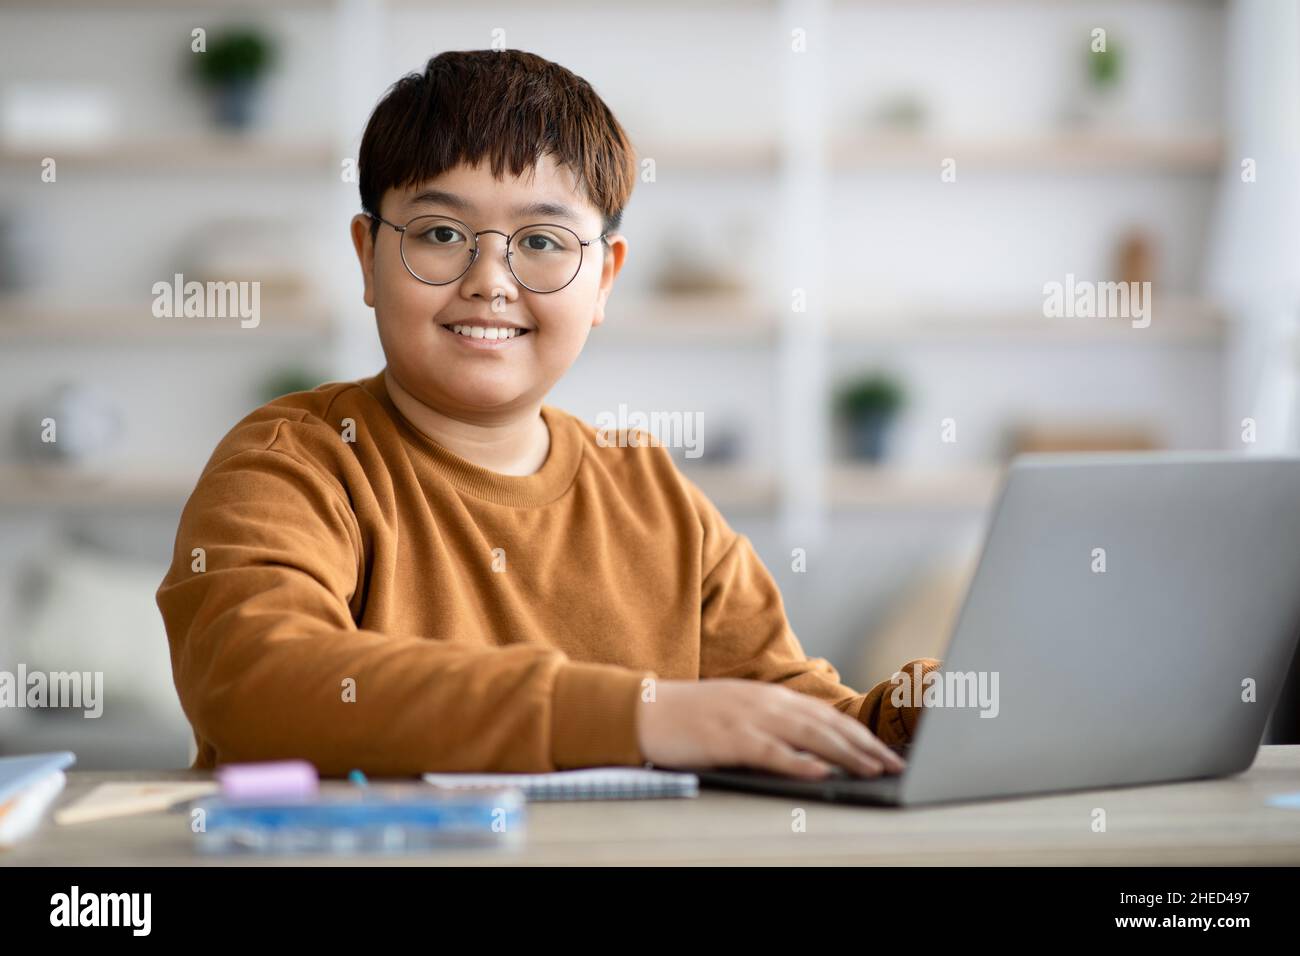 Smart teen boy sitting in front of computer, doing homework Stock Photo